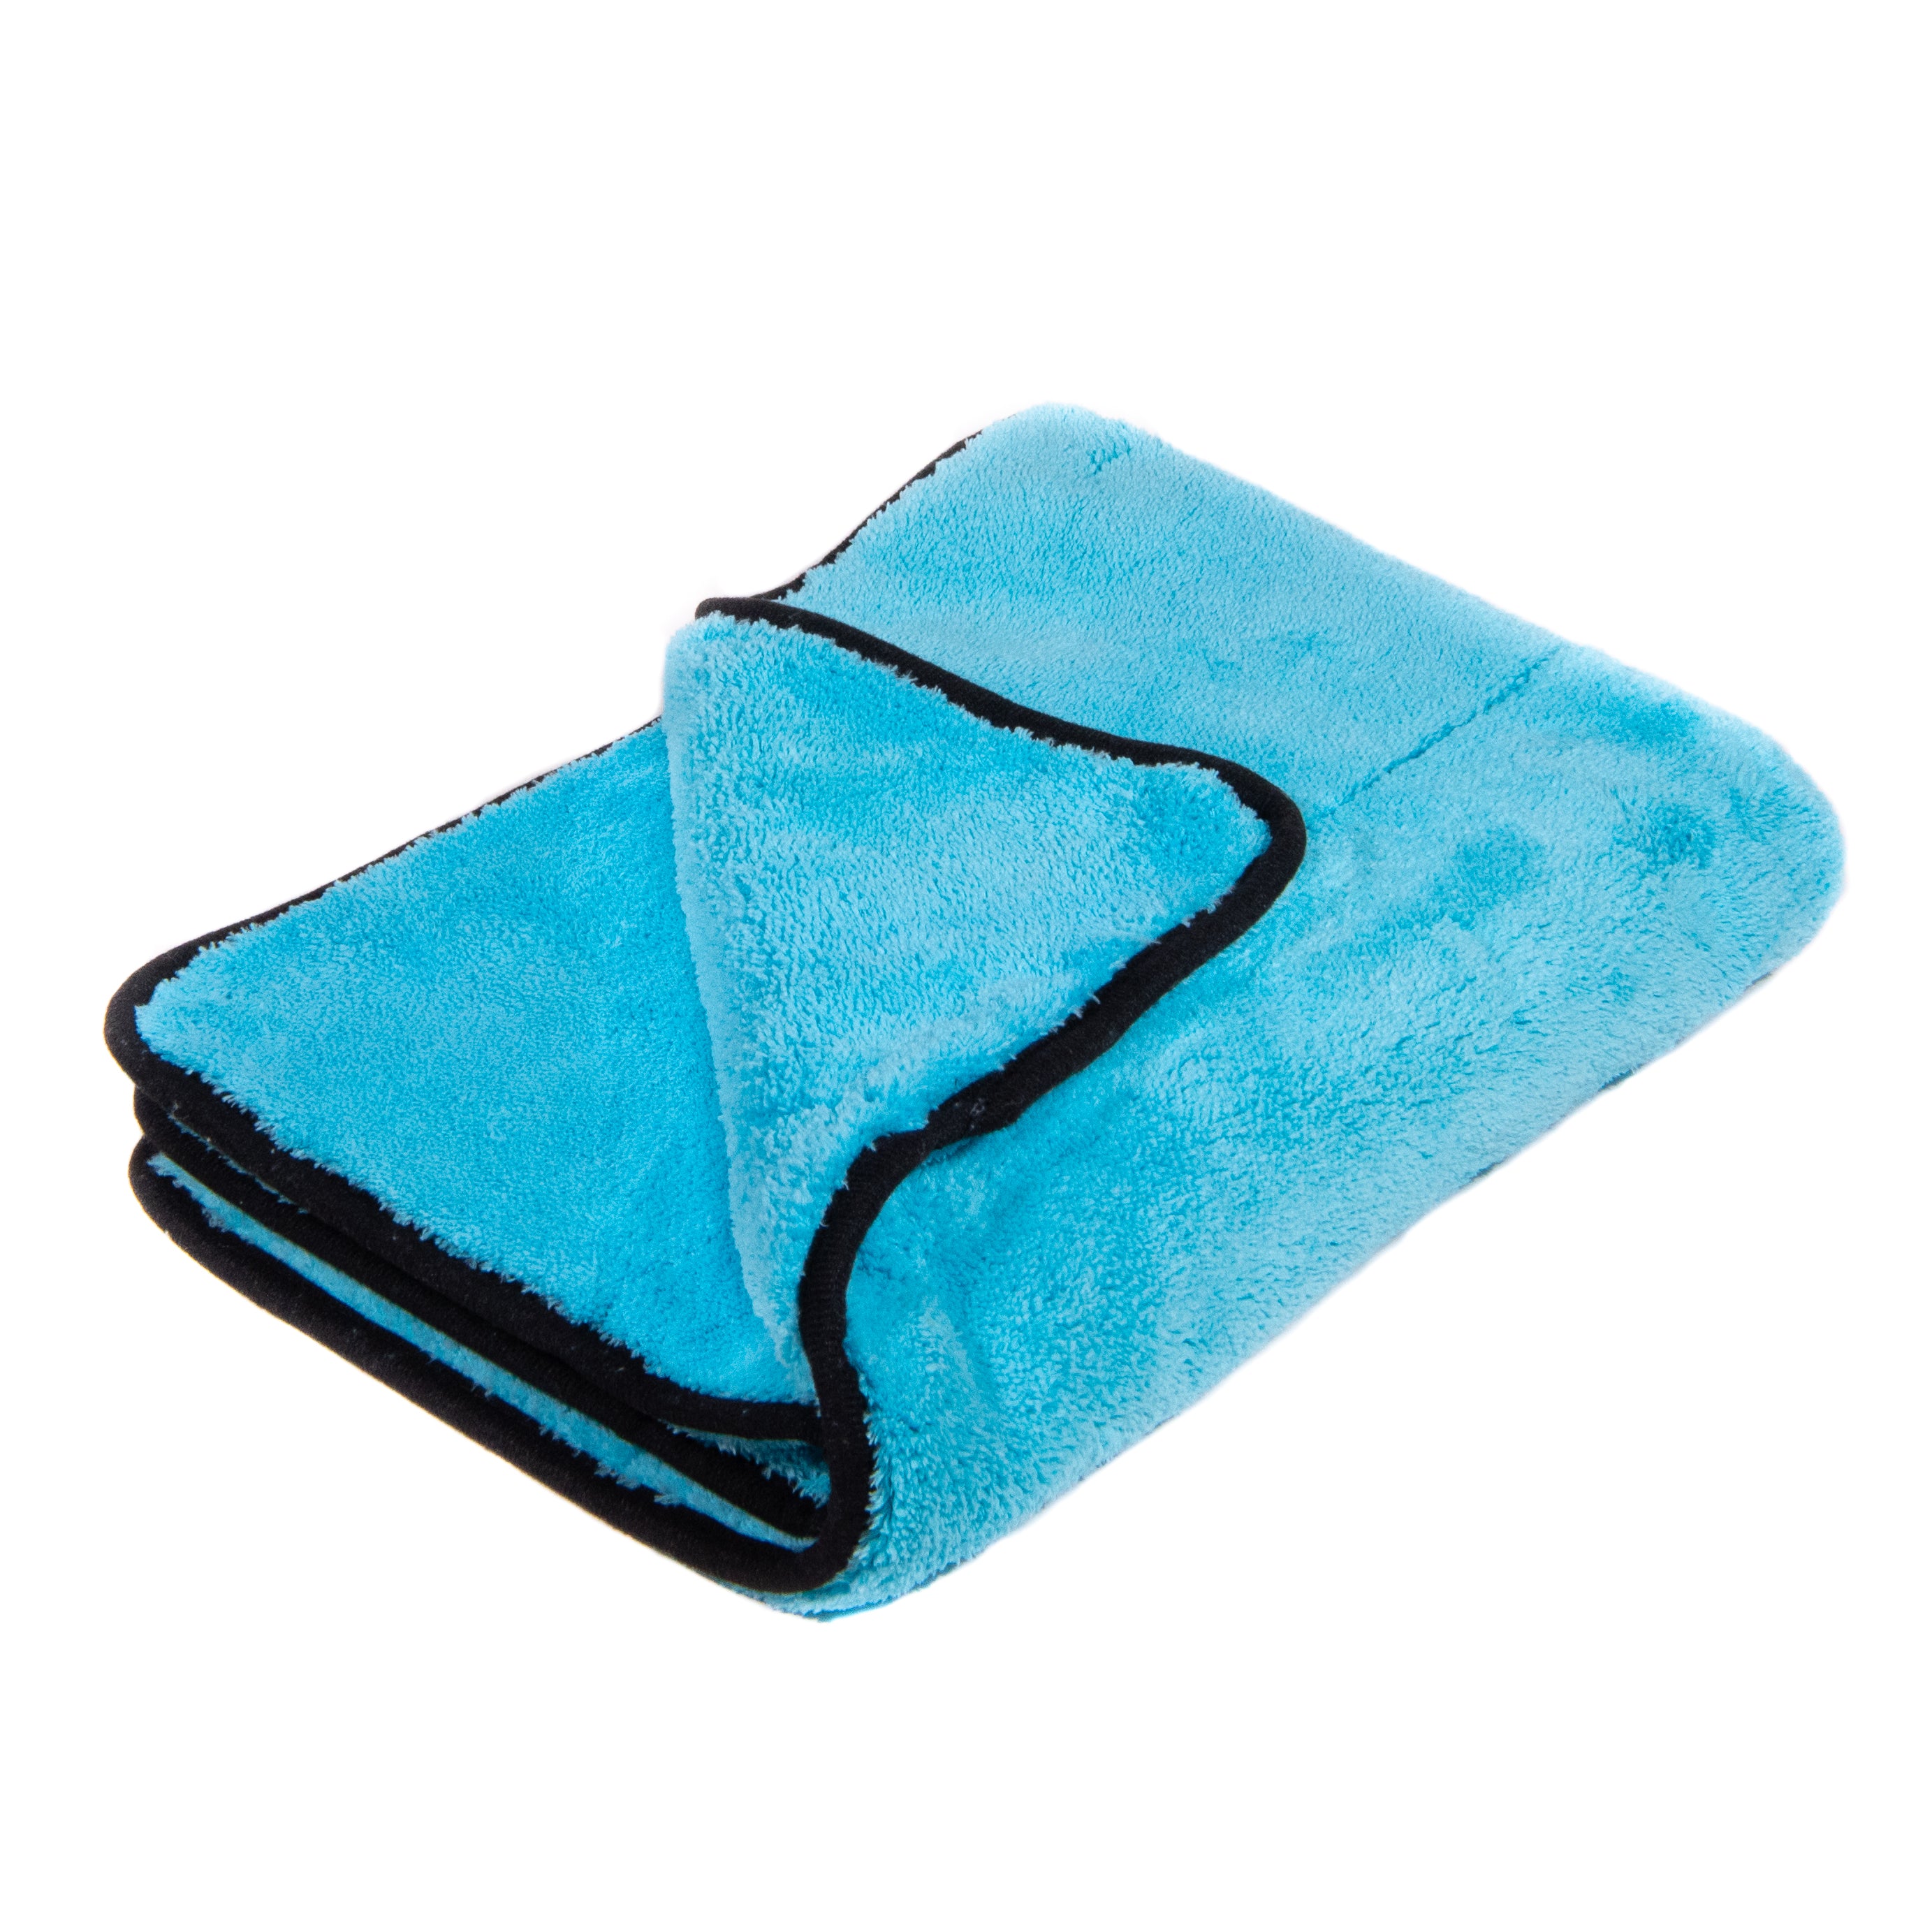 LIQUID8R Drying Towel - AQUA BLUE / ICE GREY (20x 24)